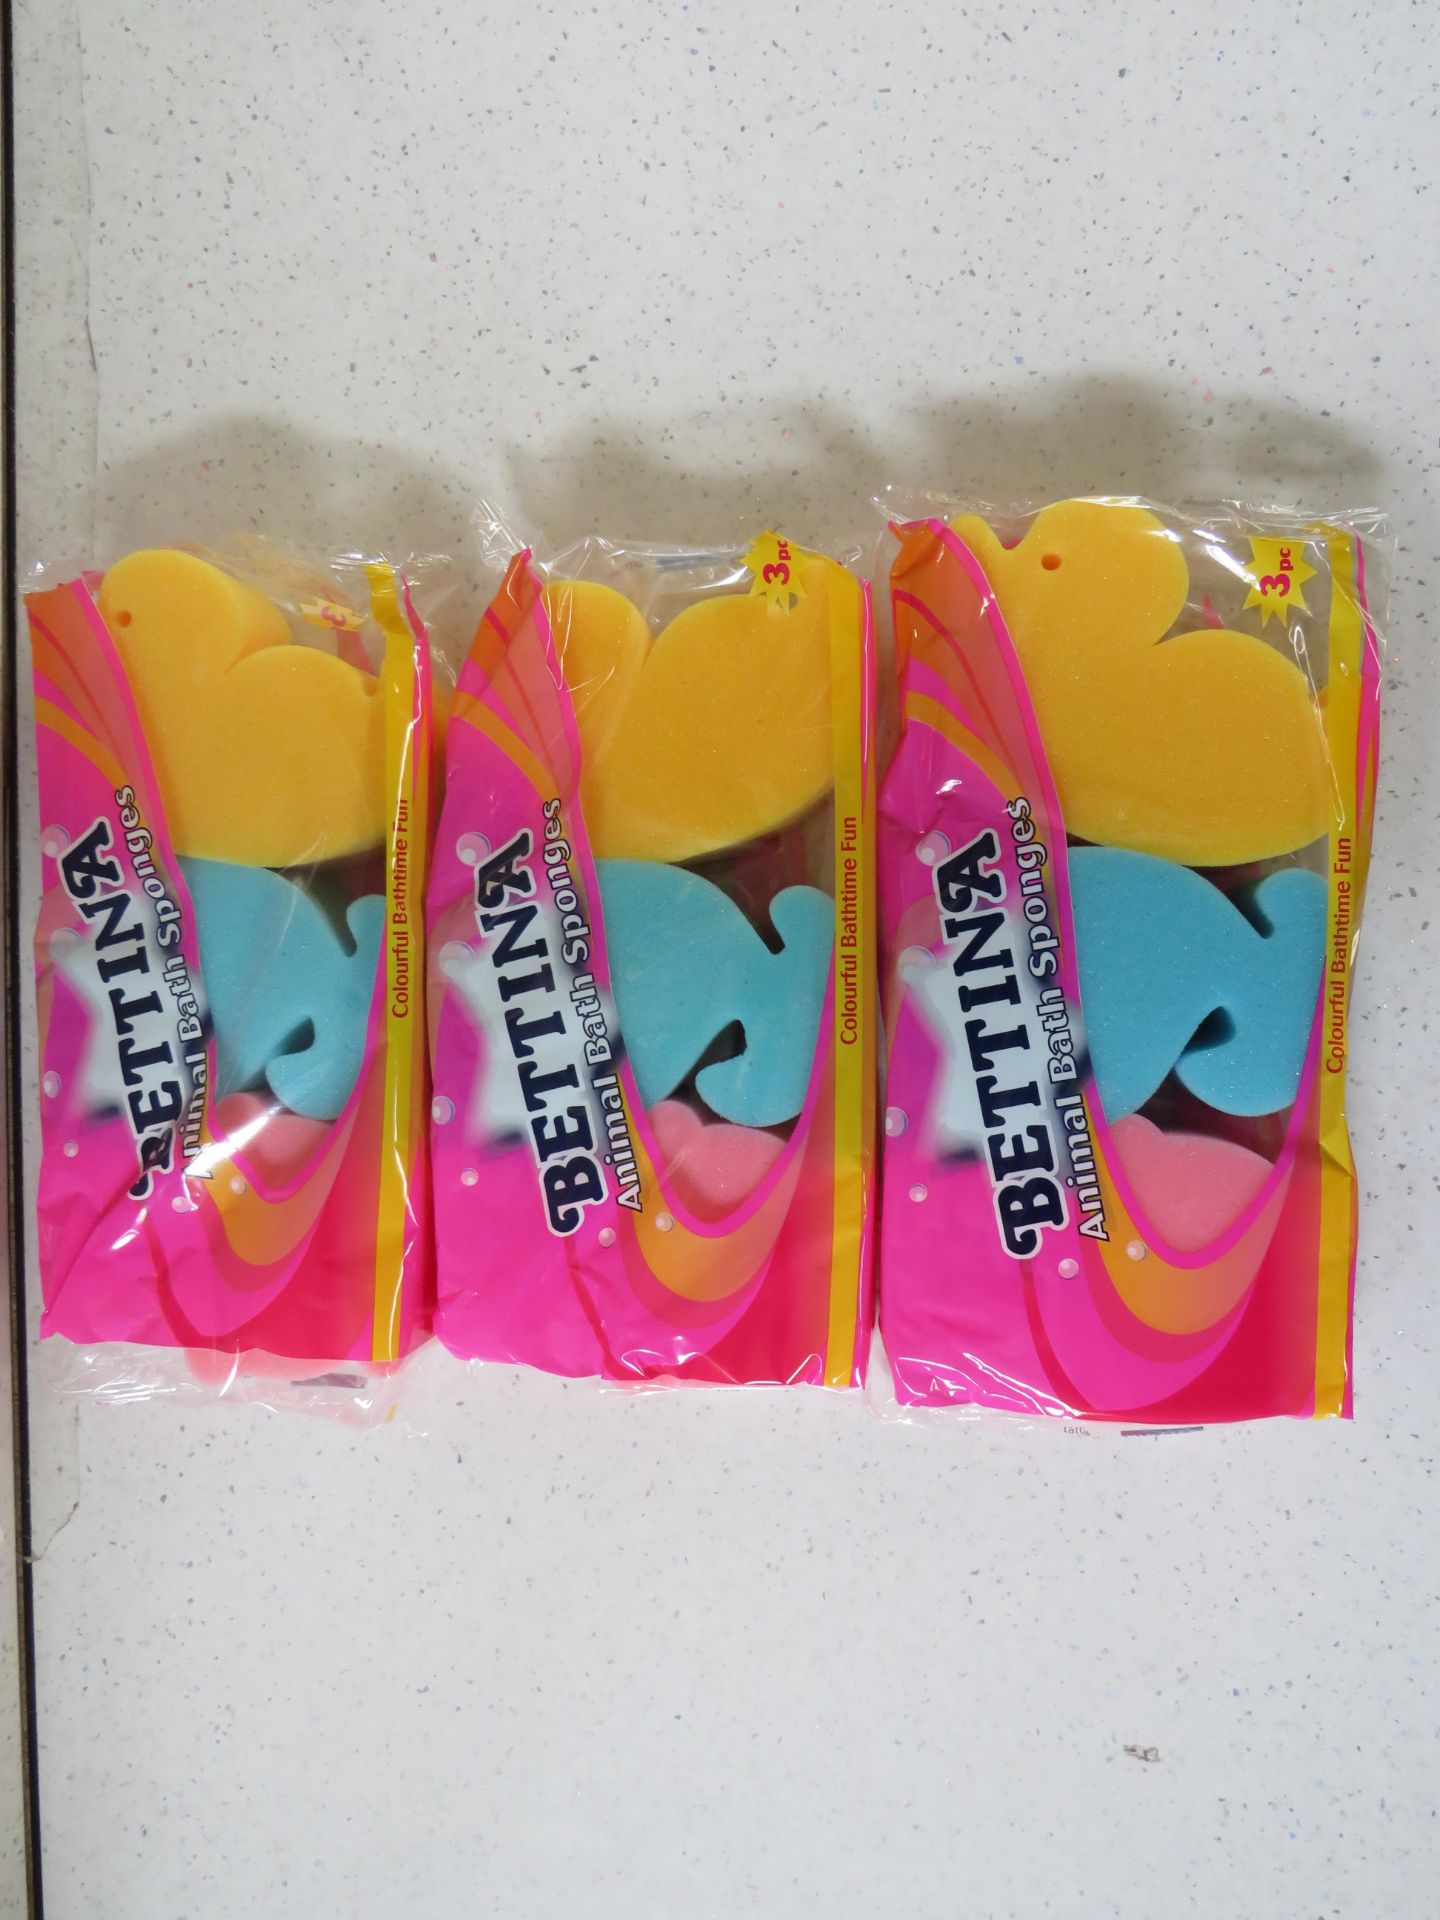 3x Bettina - Set of 3 Animal Shaped Bathtime Sponges - New & Packaged.